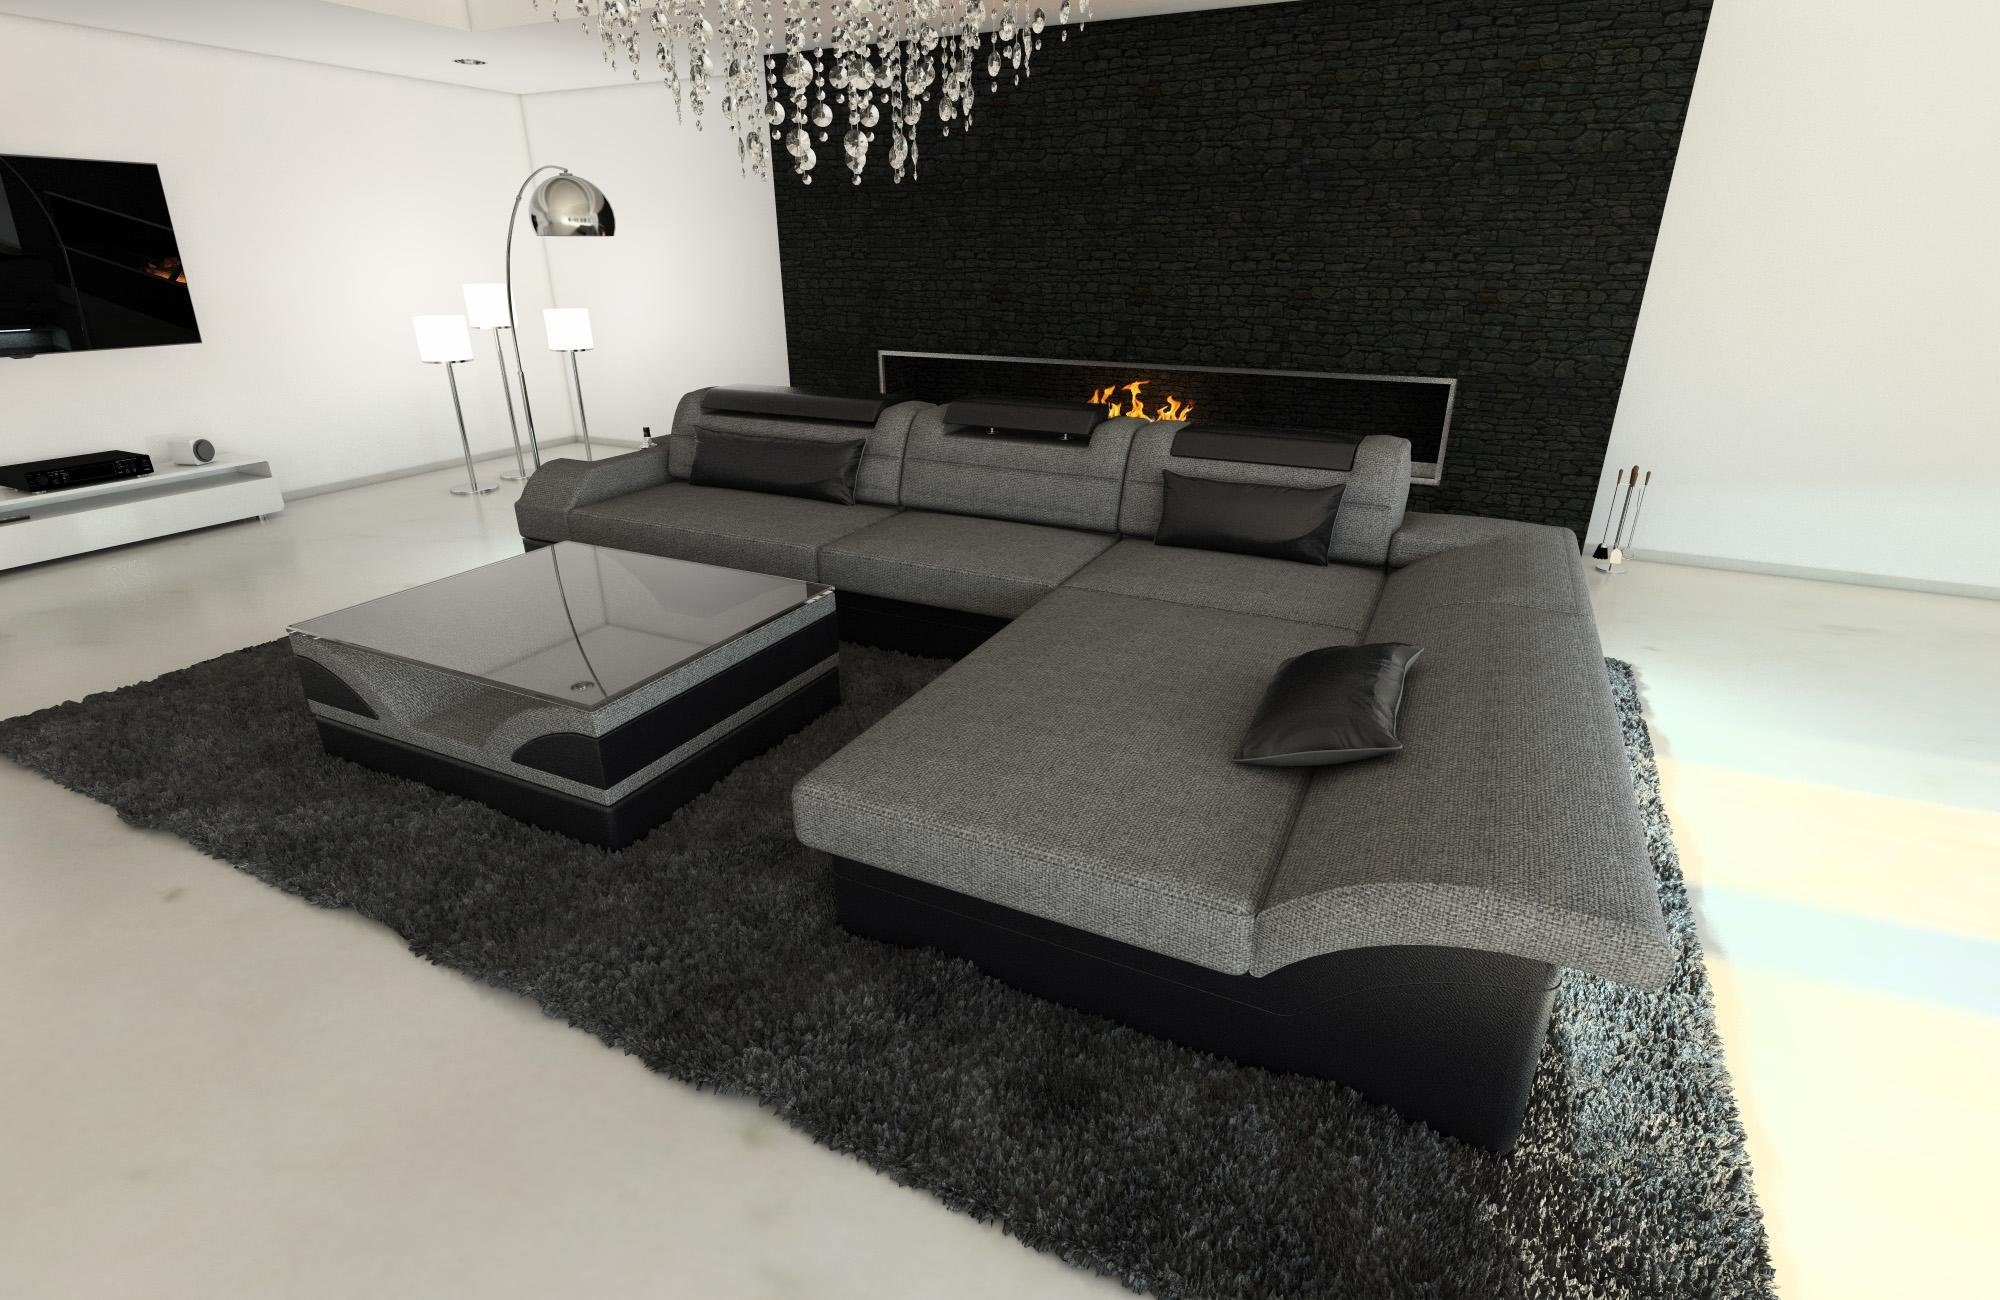 Sofa Dreams Ecksofa Stoffsofa Couch ausziehbare Monza Form, Polstersofa Designersofa LED, Stoff Grau-Schwarz mit Bettfunktion, L H5